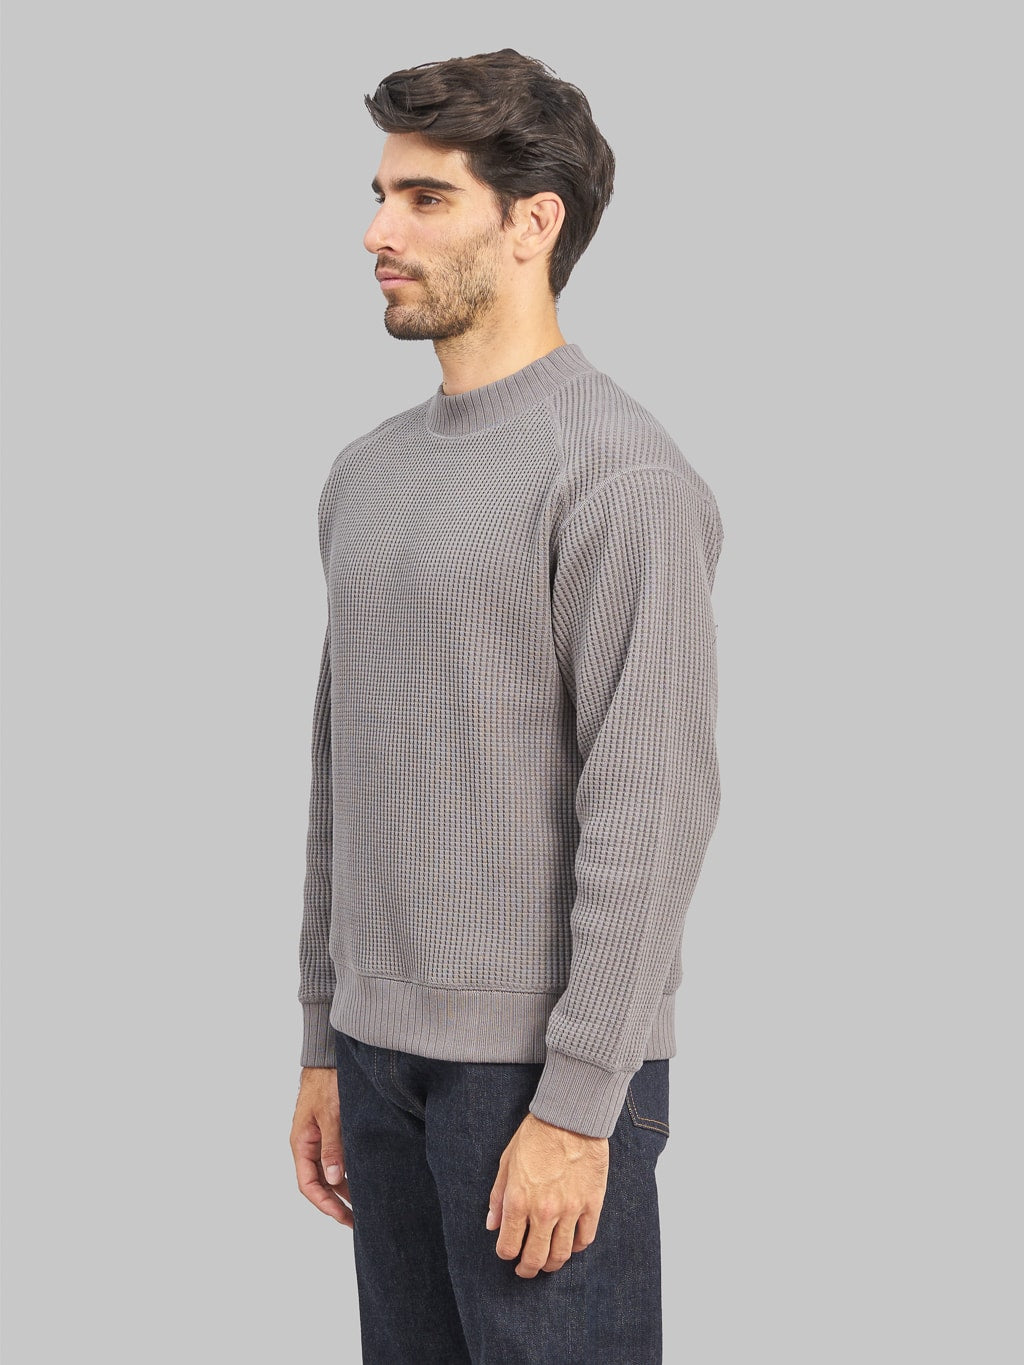 Jackman Waffle Midneck Sweater Iron Grey model side fit